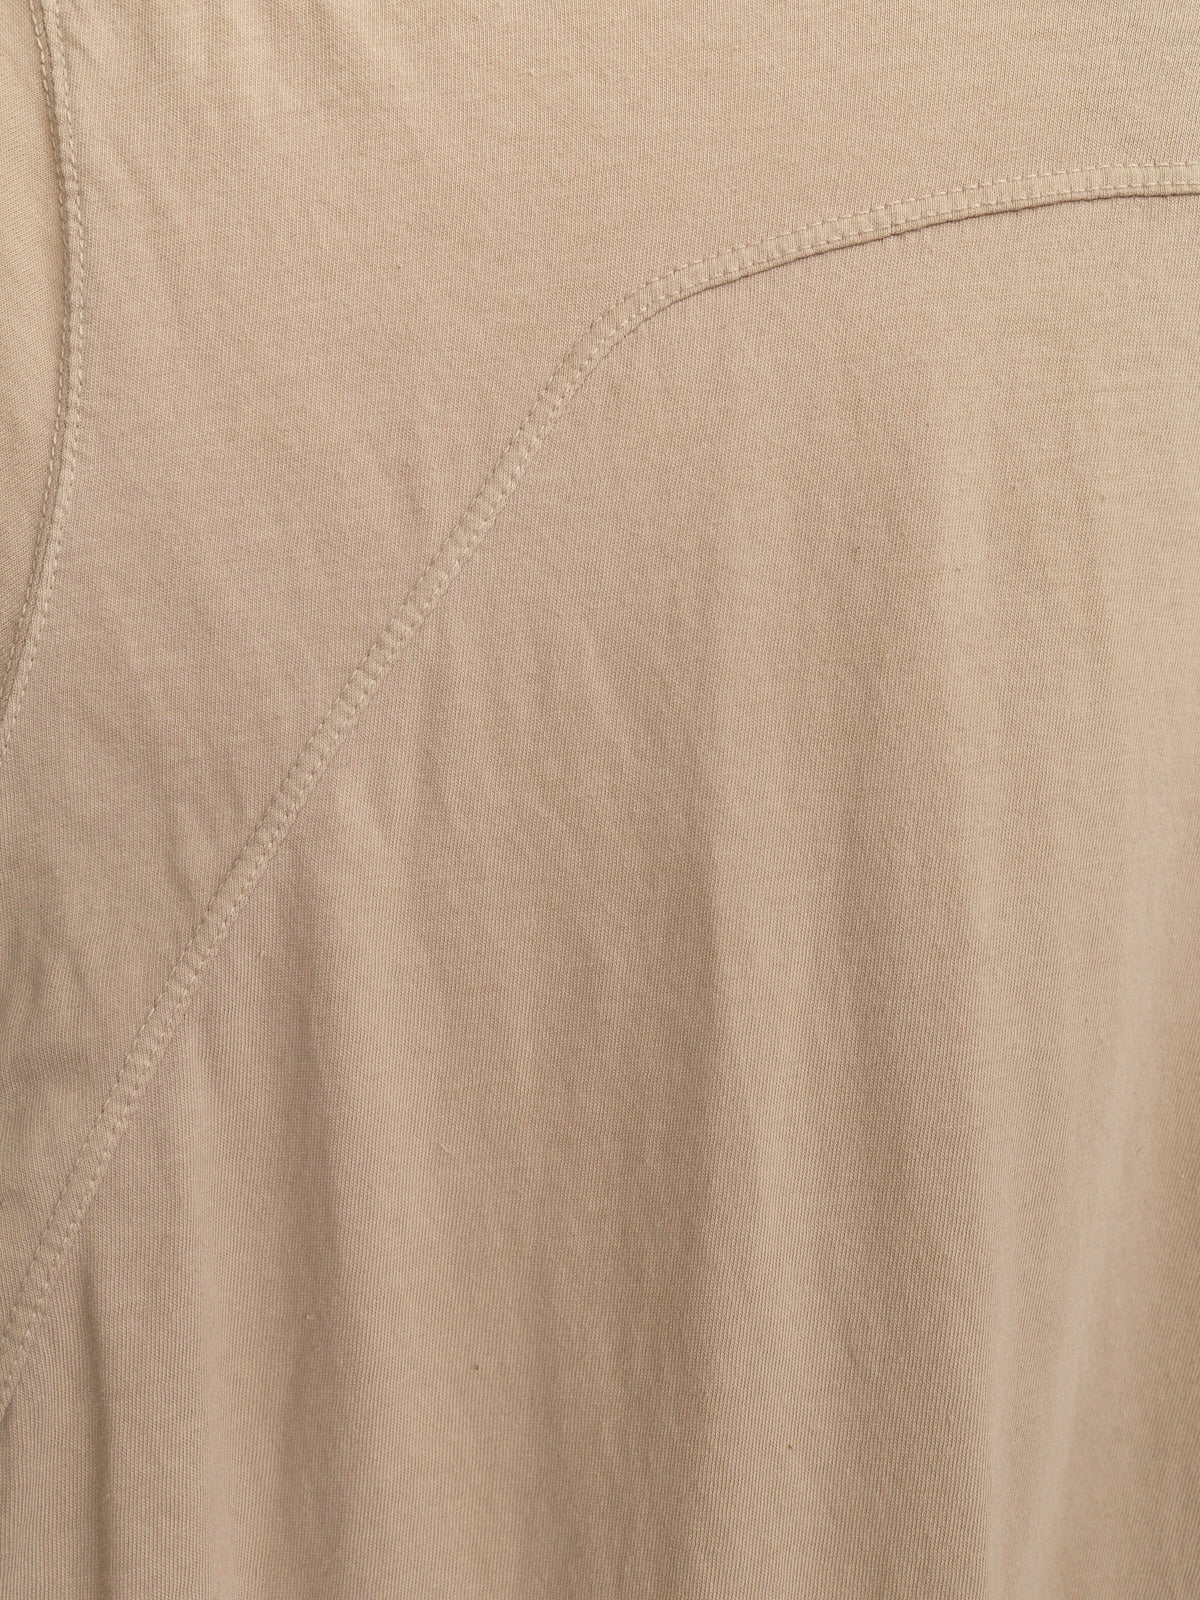 Rick Owens DRKSHDW beige ("pearl") cotton paneled tshirt - mens S